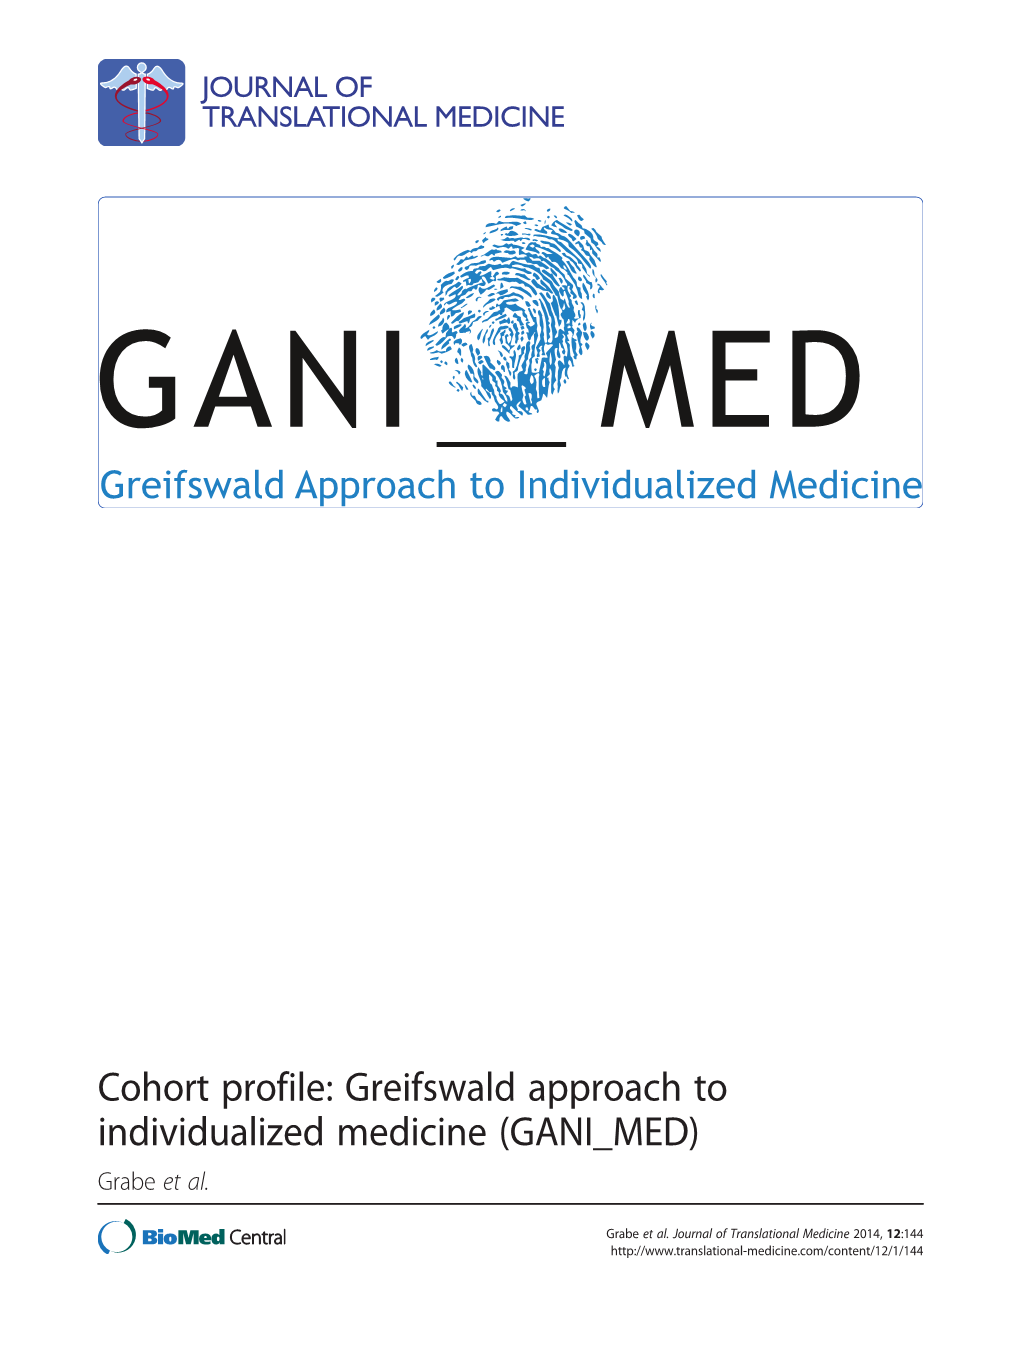 Greifswald Approach to Individualized Medicine (GANI MED) Grabe Et Al